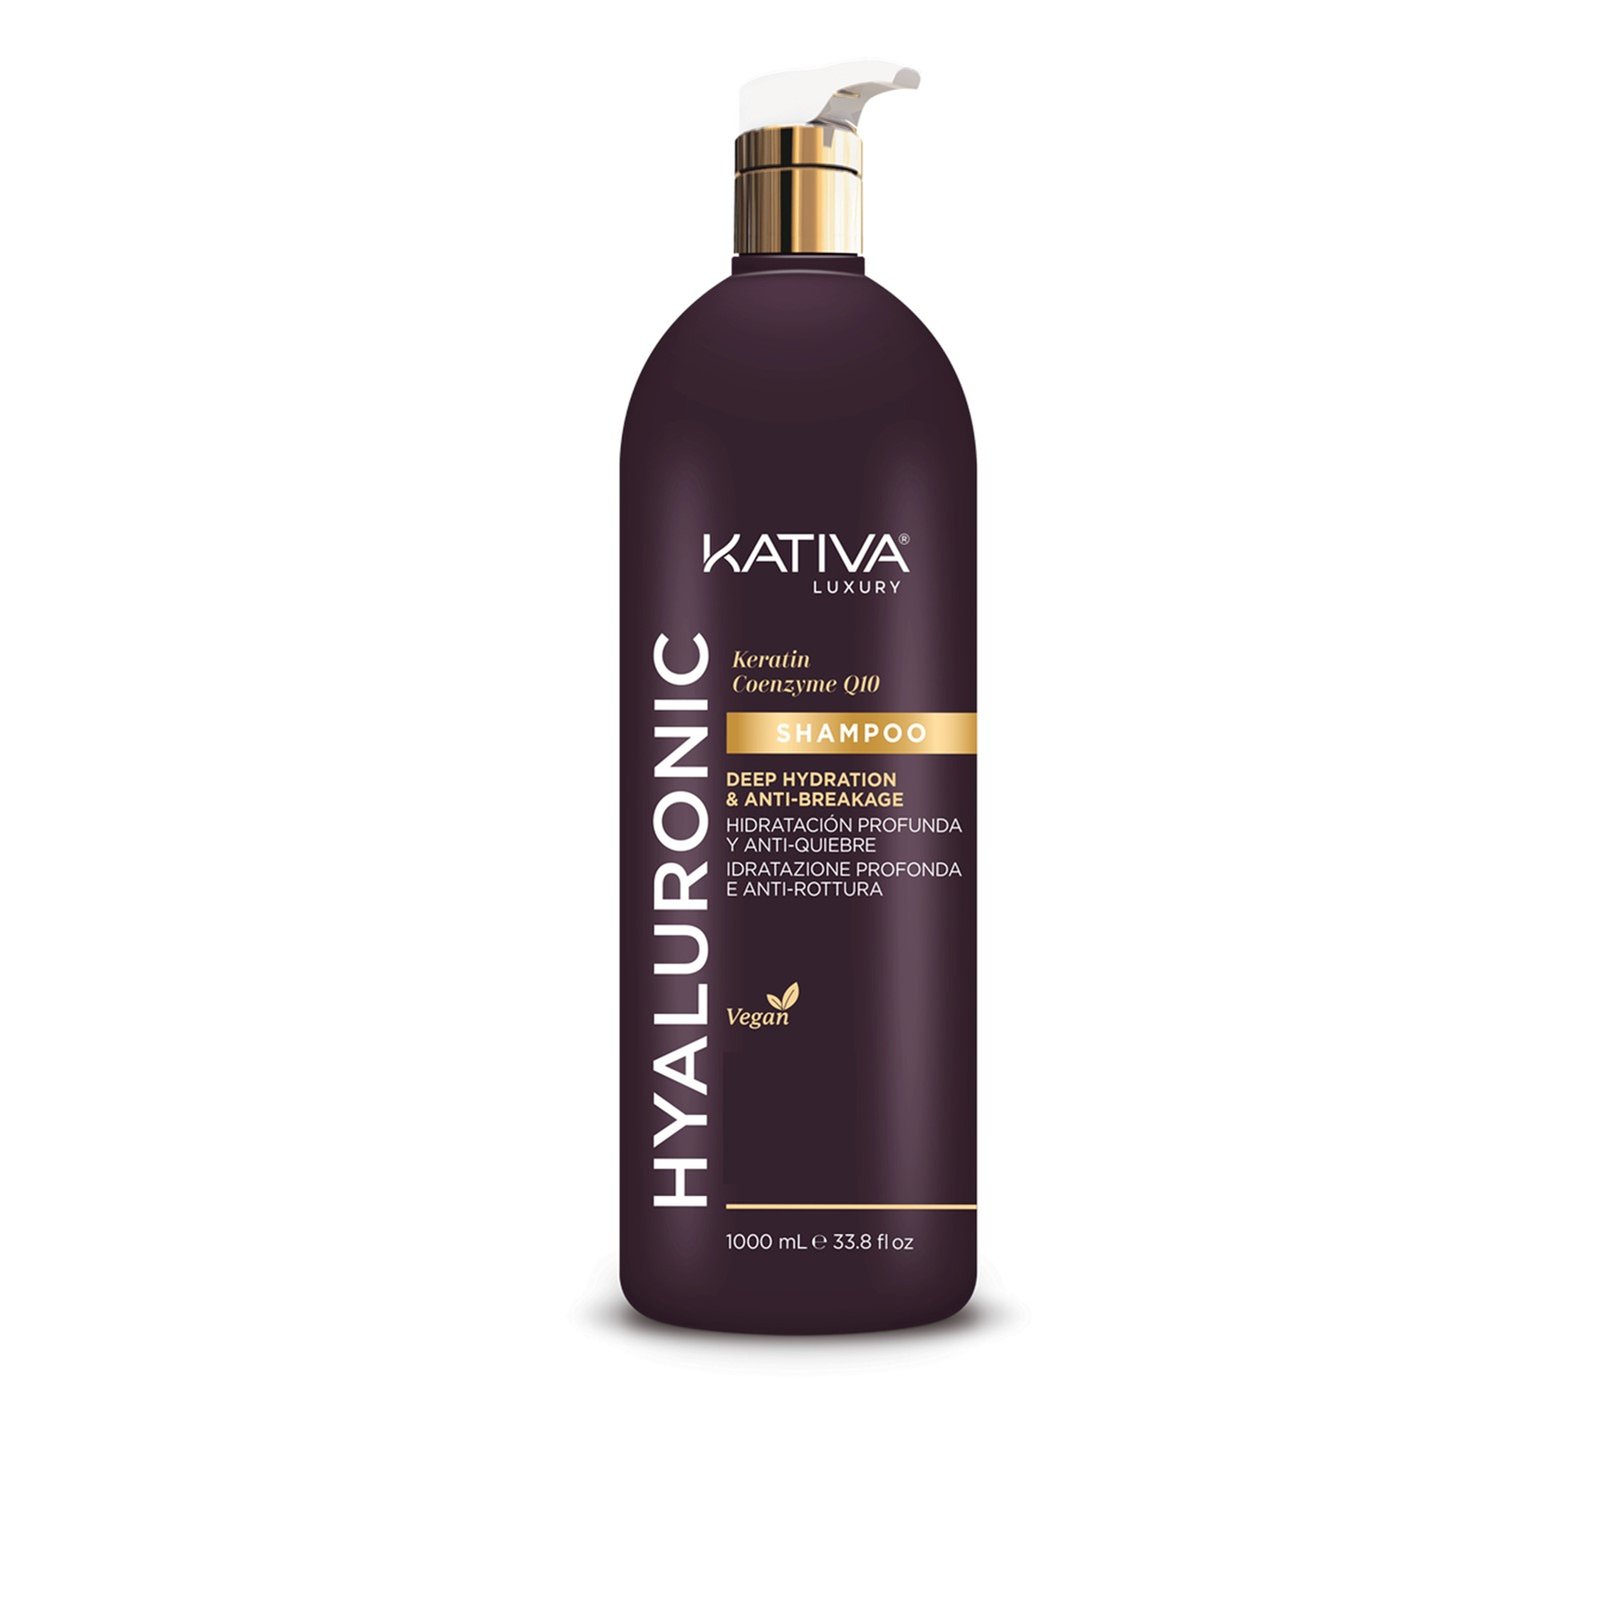 Kativa Luxury Hyaluronic Deep Hydration & Anti-Breakage Shampoo 1L